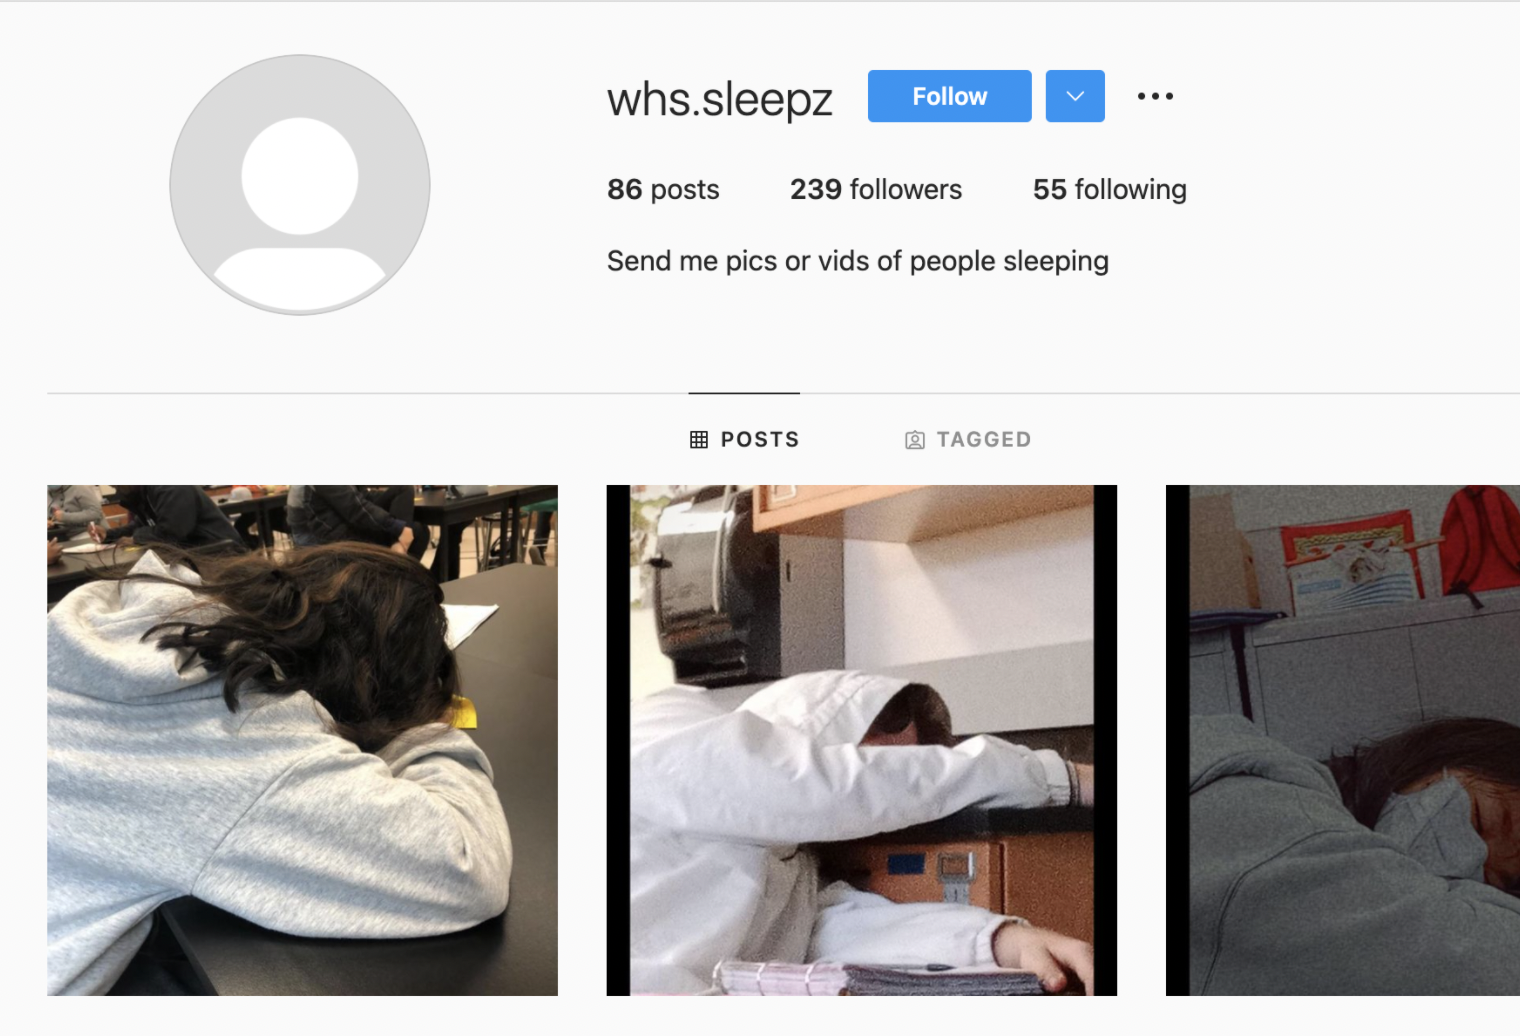 @whs.sleepz Instagram page.